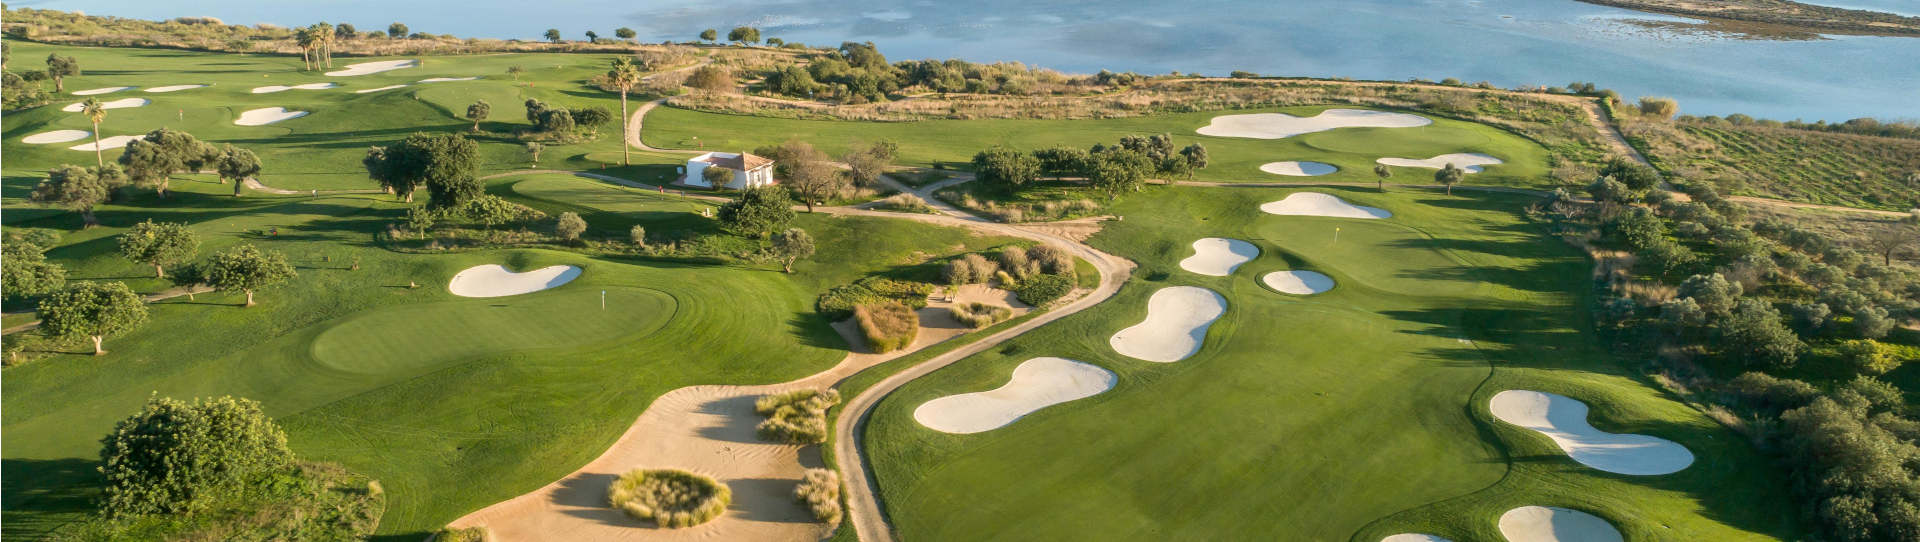 Portugal golf courses - Quinta da Ria Golf Course - Photo 1